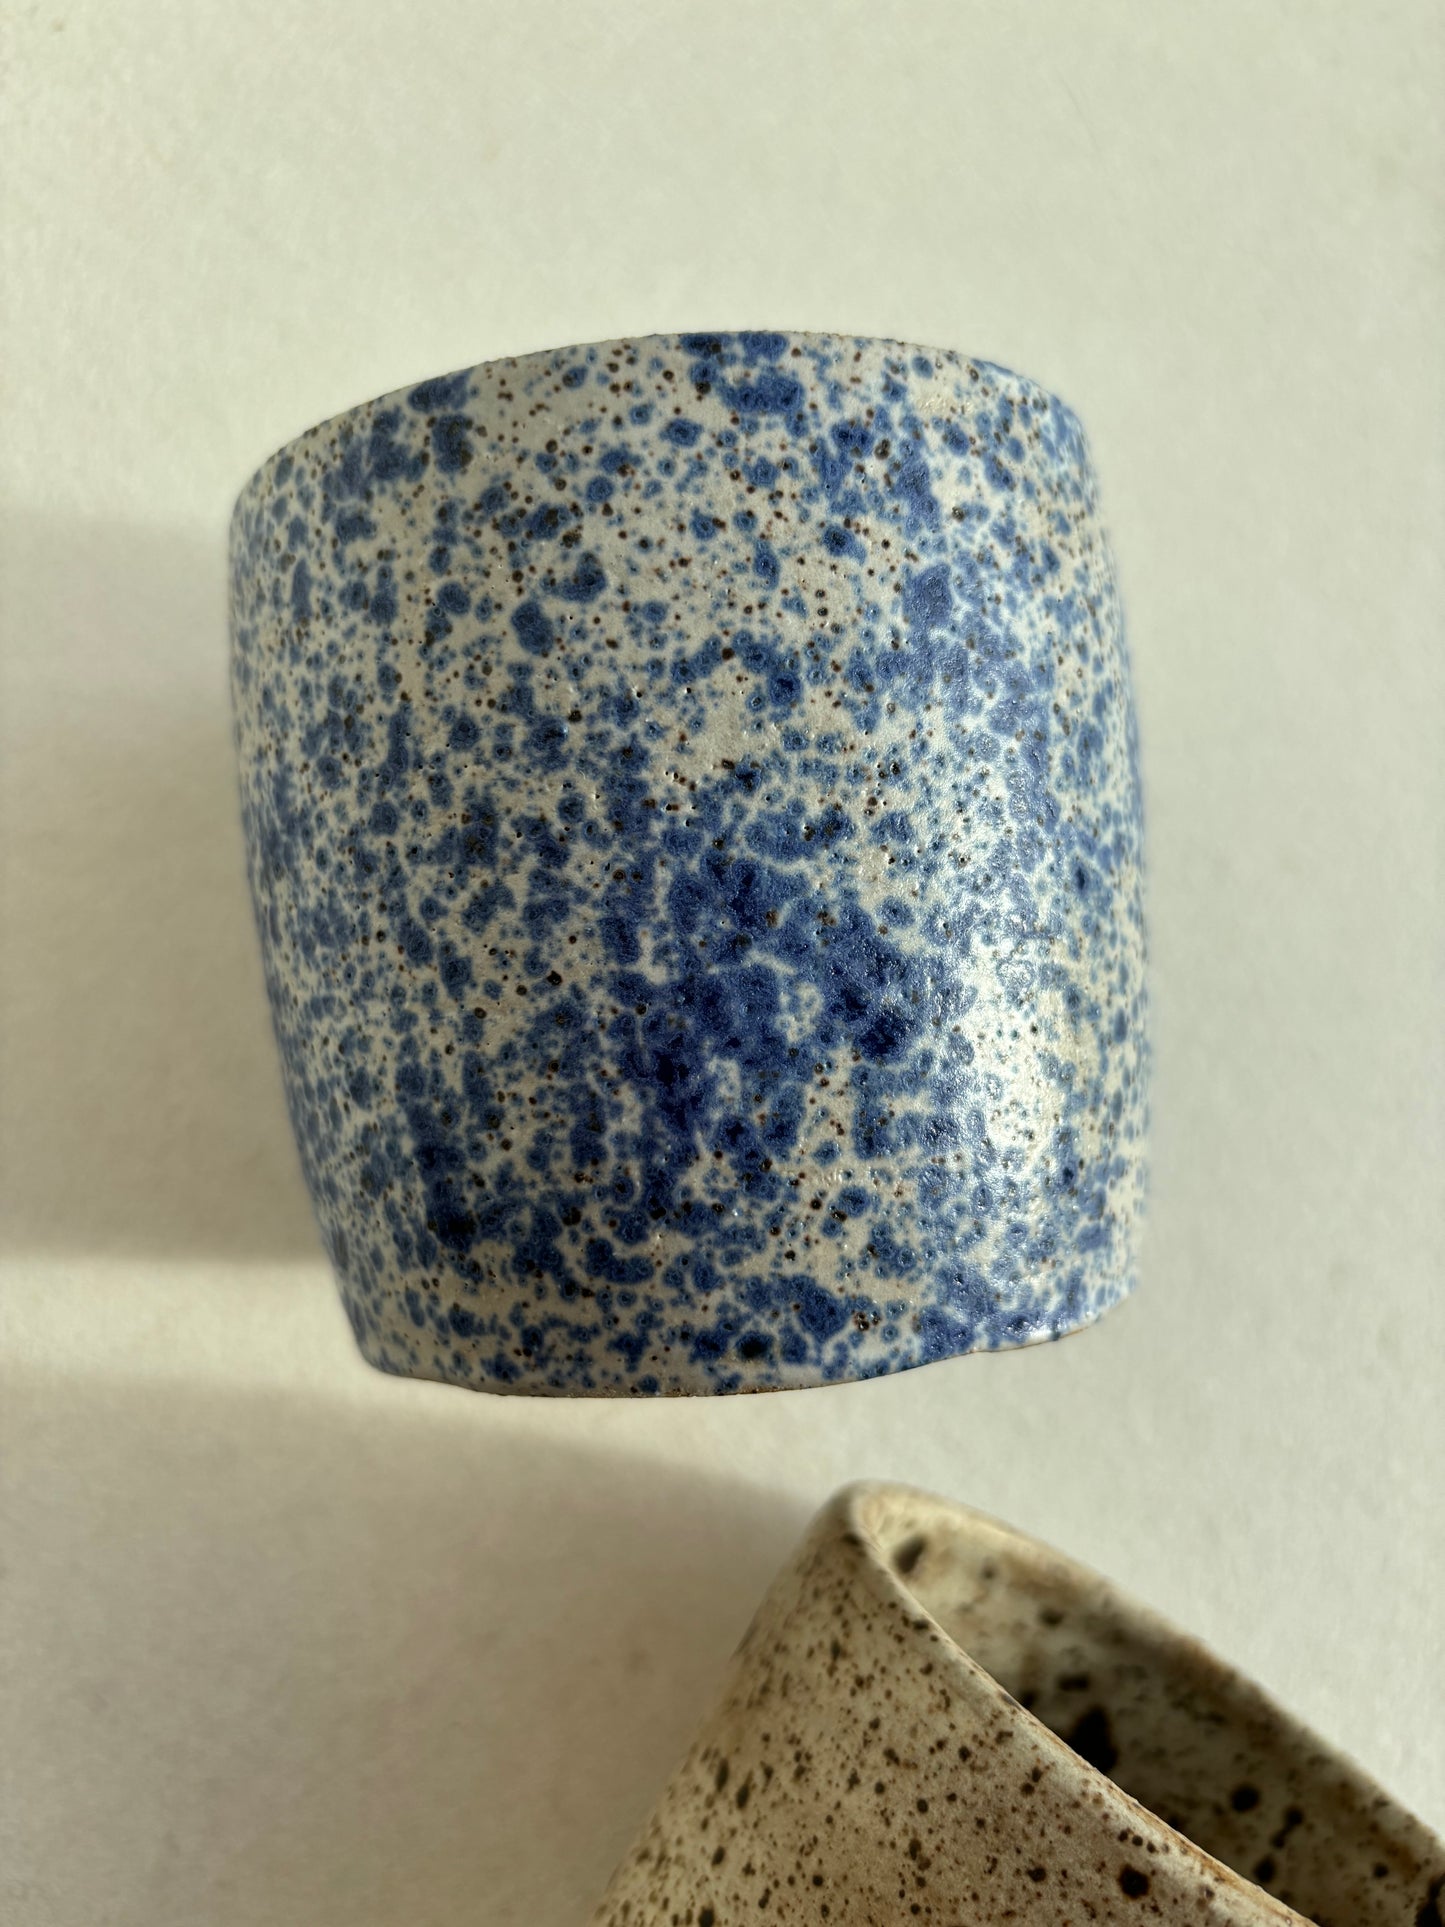 Blue Speckle Ceramic Cup